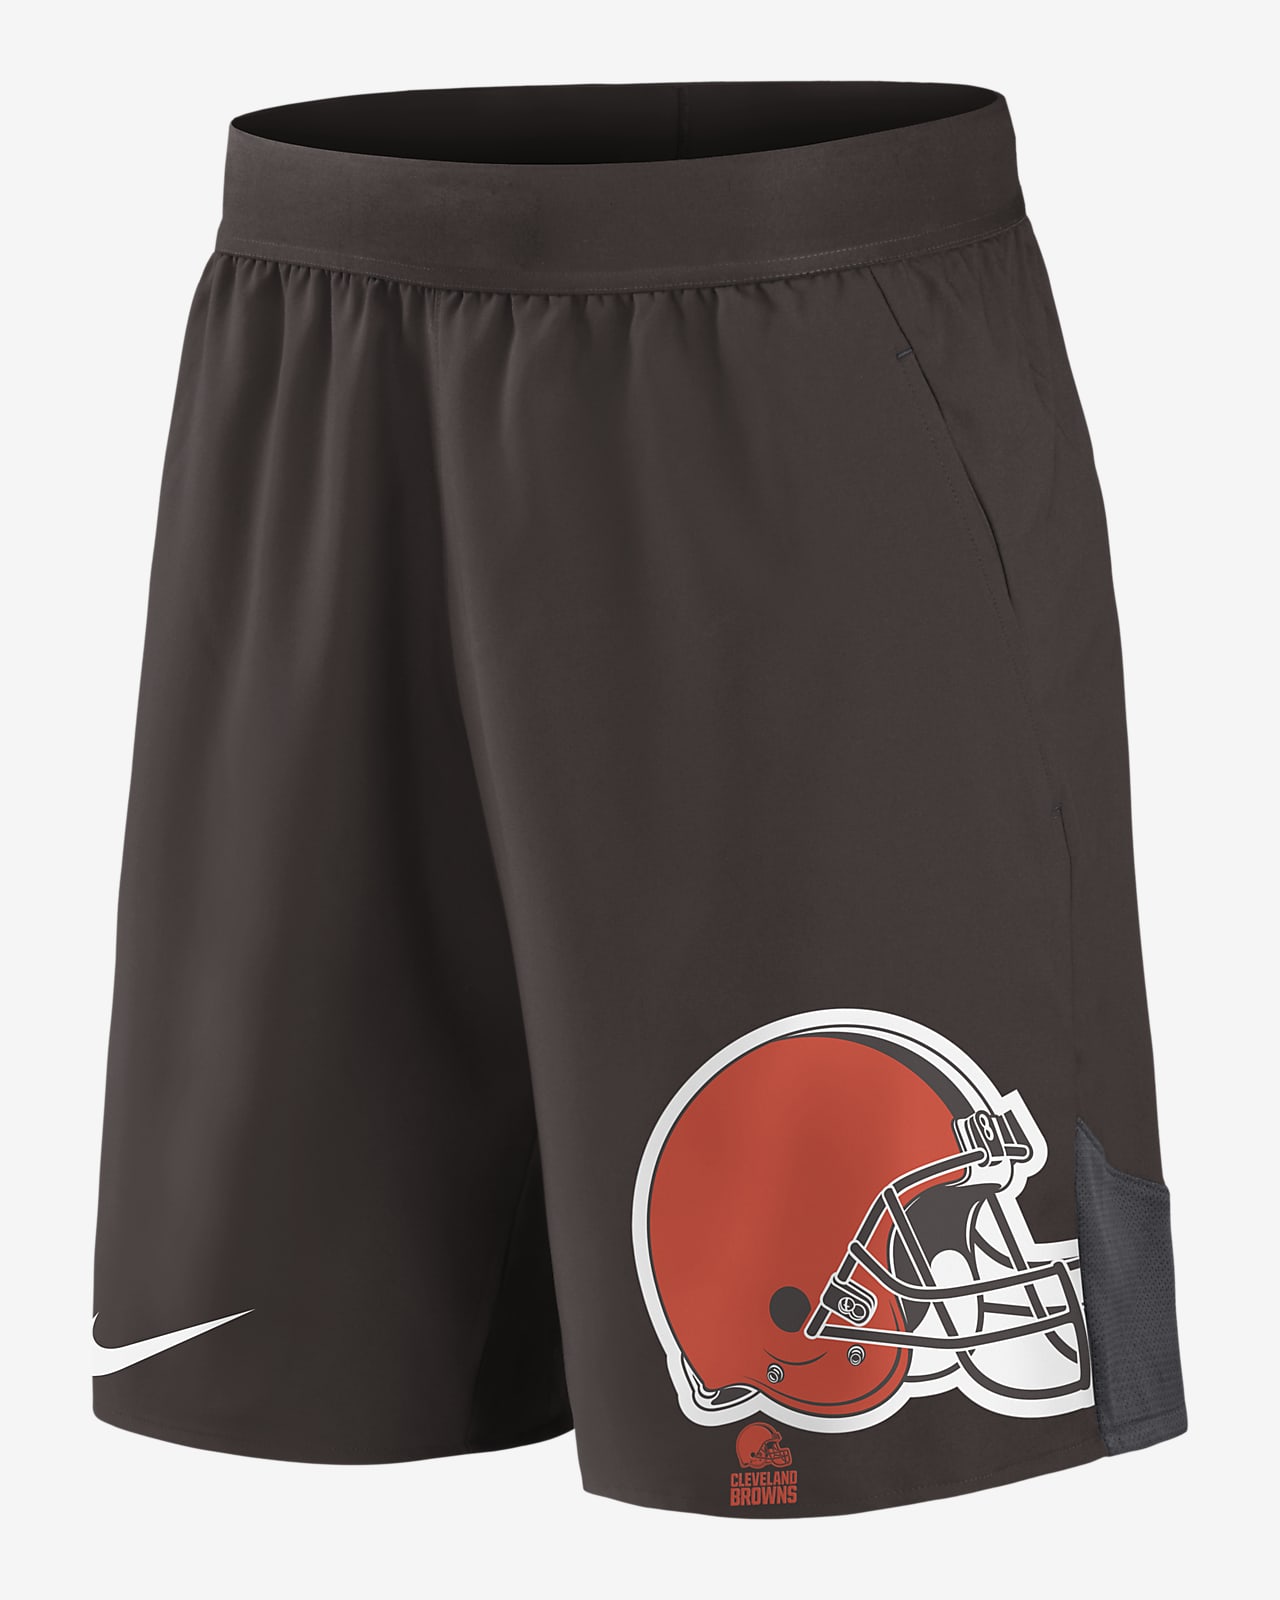 Nike Dri-FIT Stretch (NFL Cleveland Browns) Men's Shorts